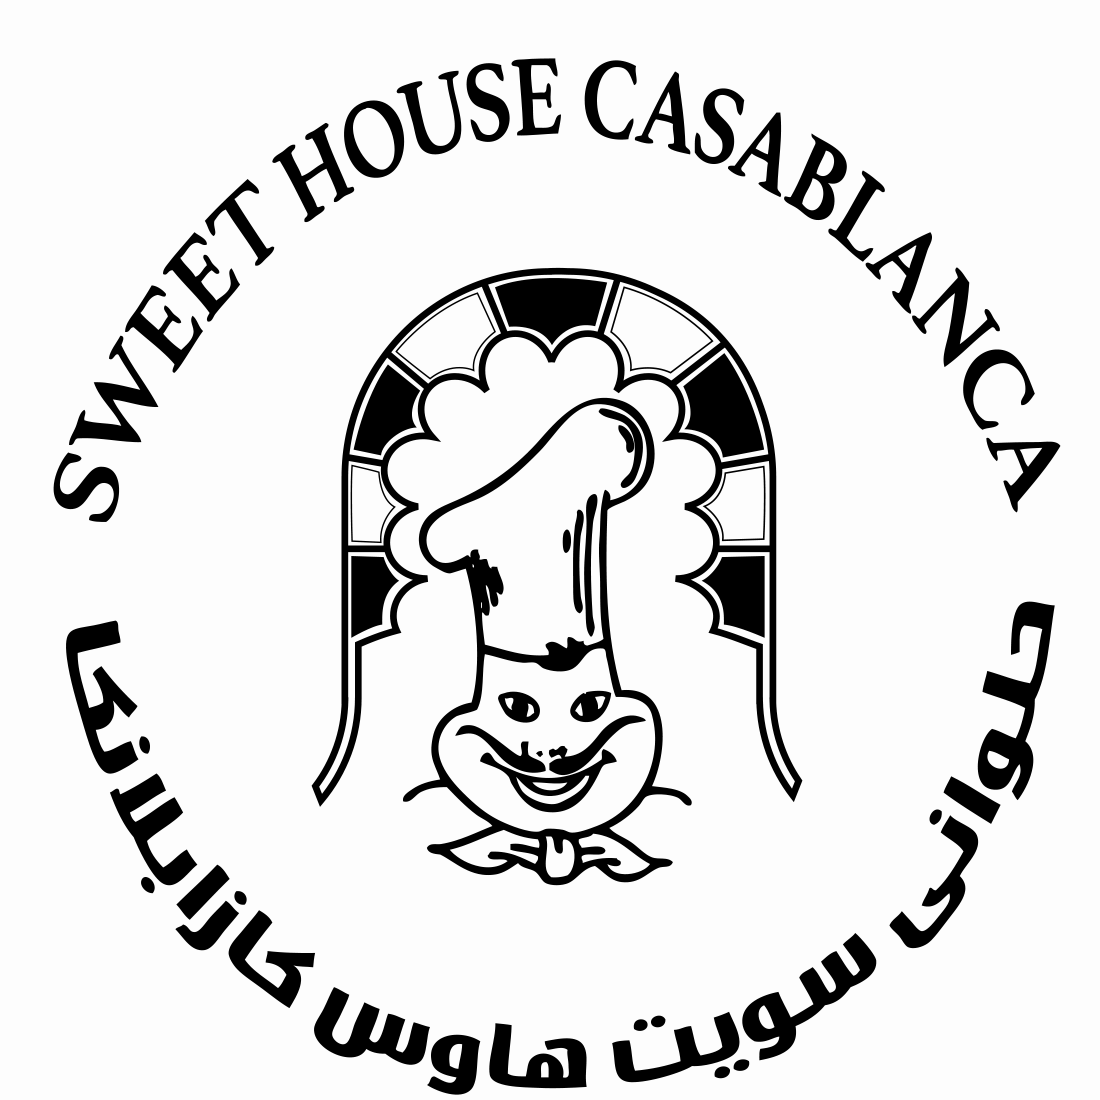 Sweet House Casablanca